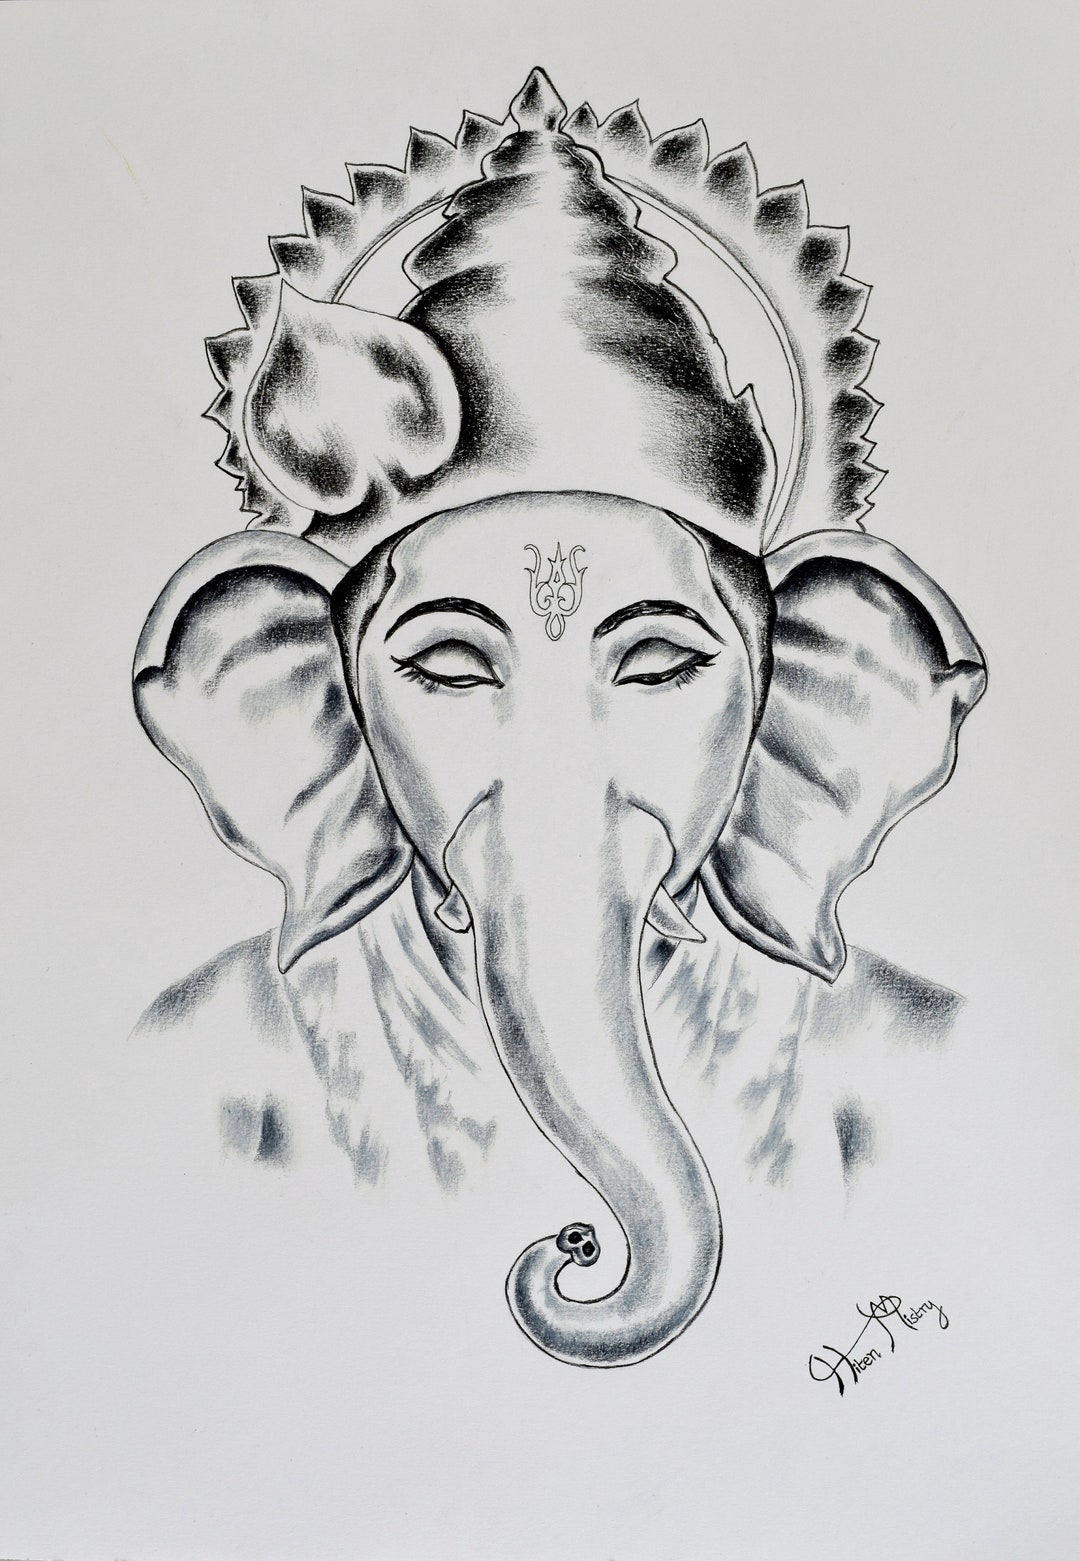 Buy Original Ganesh Drawing Online in India - Etsy